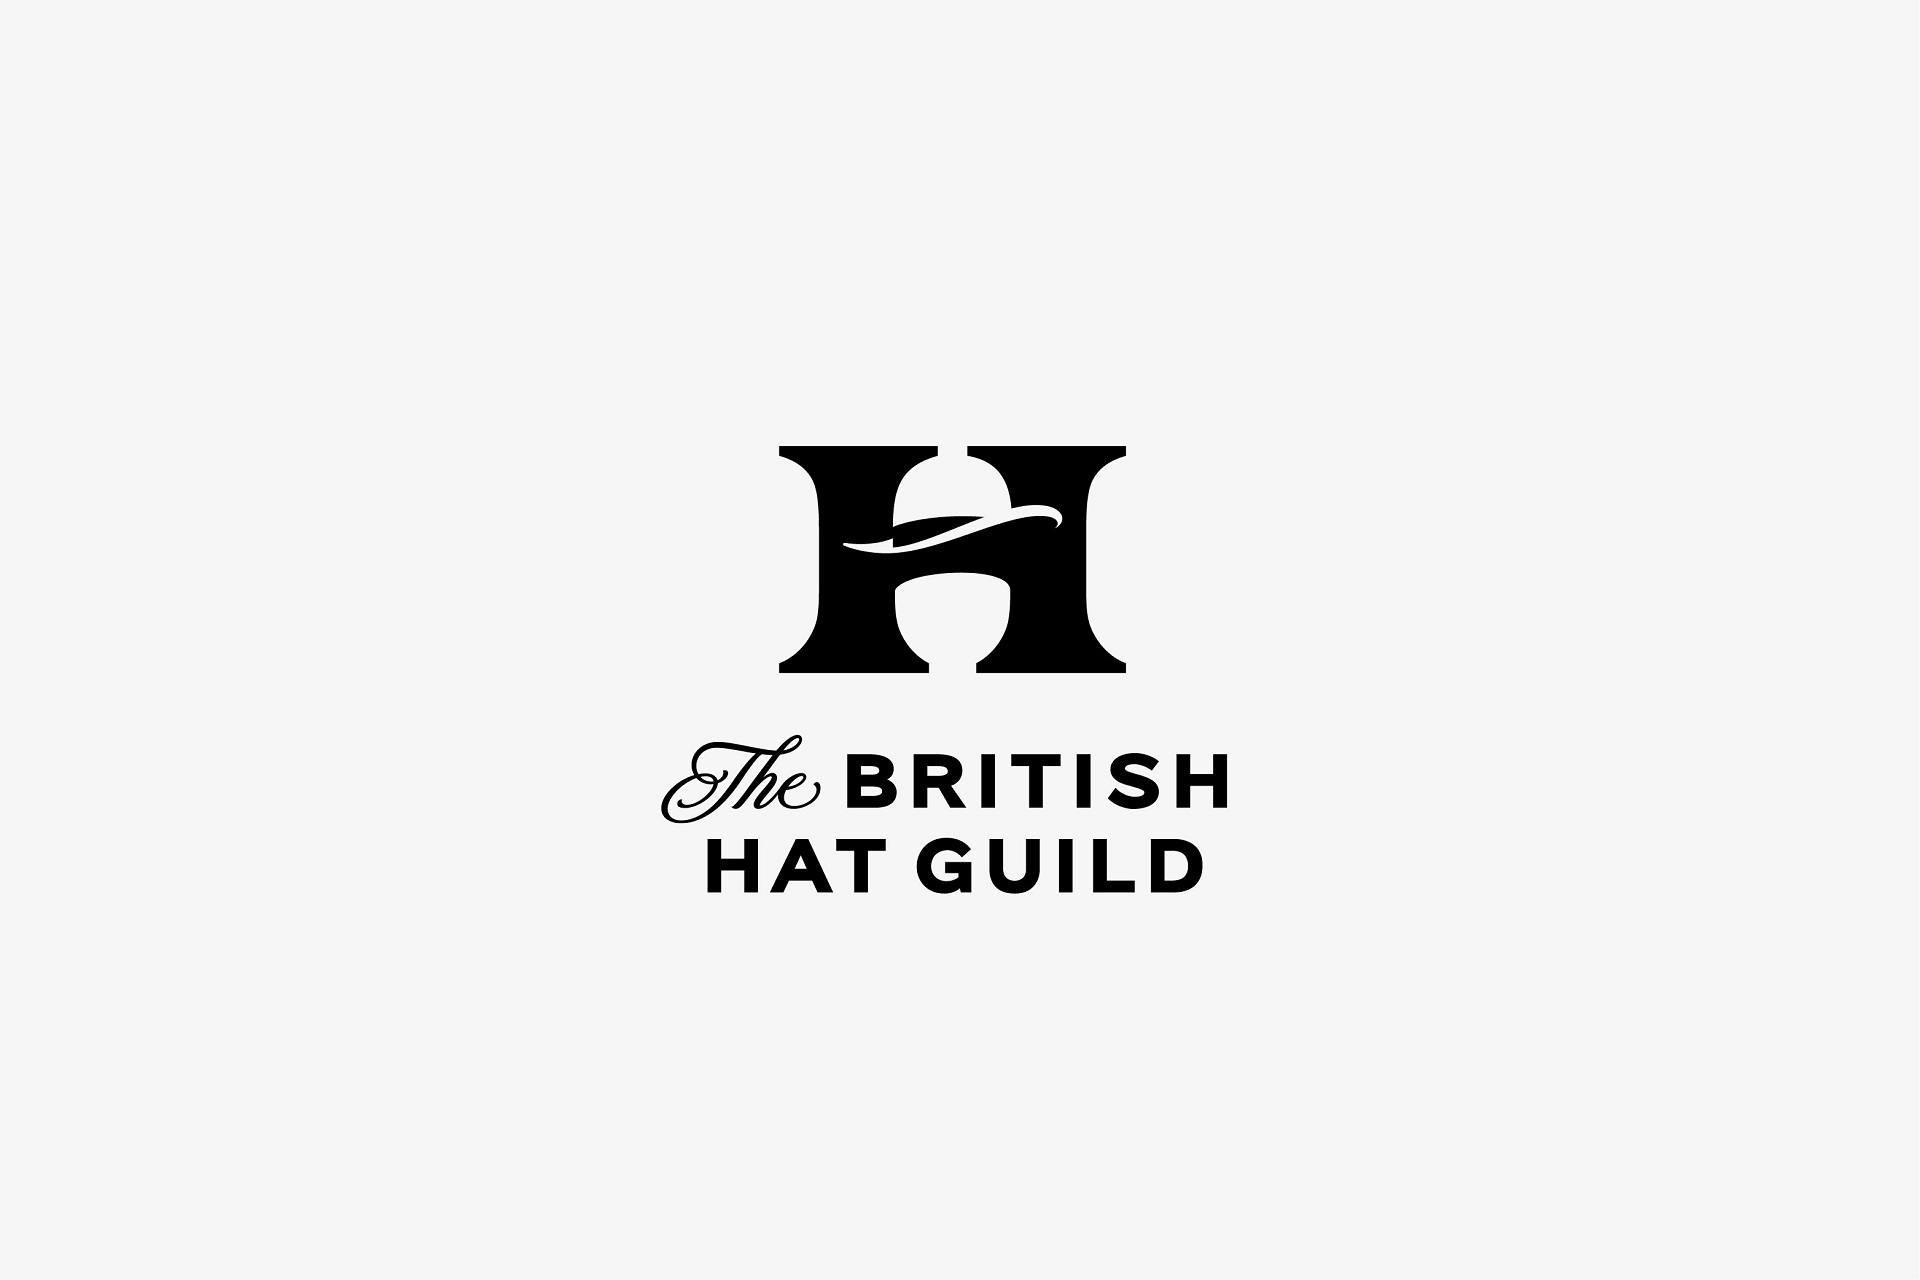 British Hat Guild rebrand